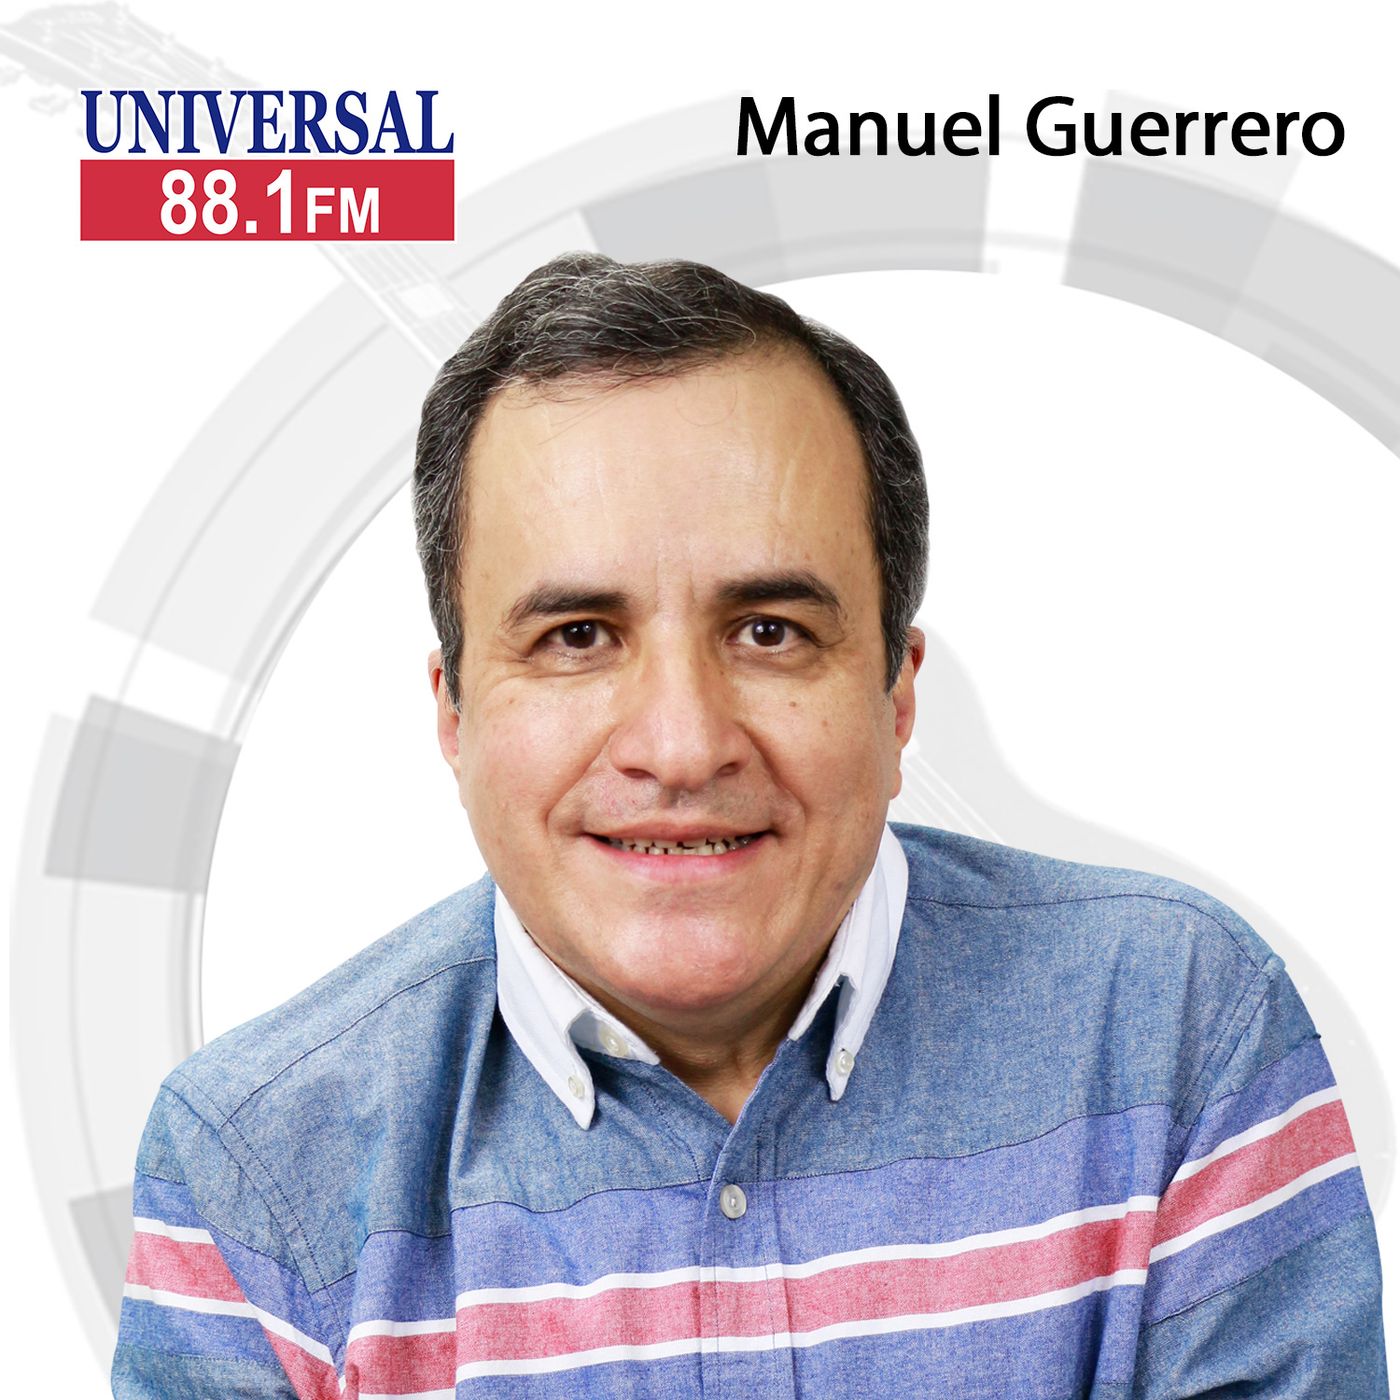 Universal - Manuel Guerrero